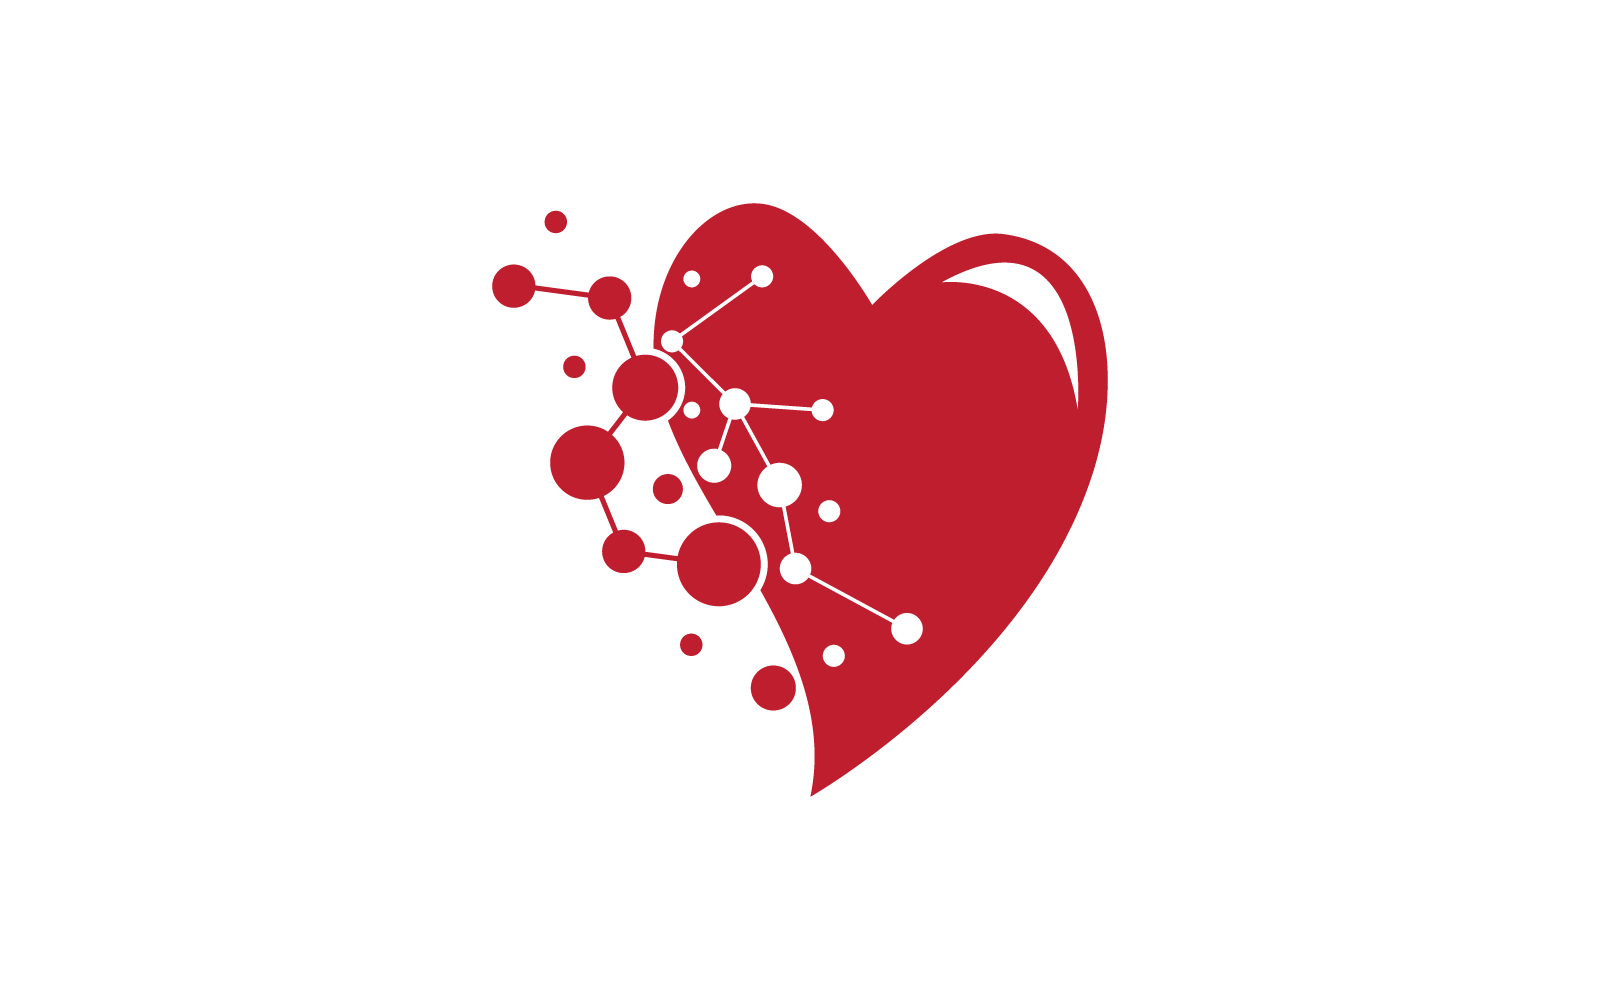 Heart and molecule design vector illustration template